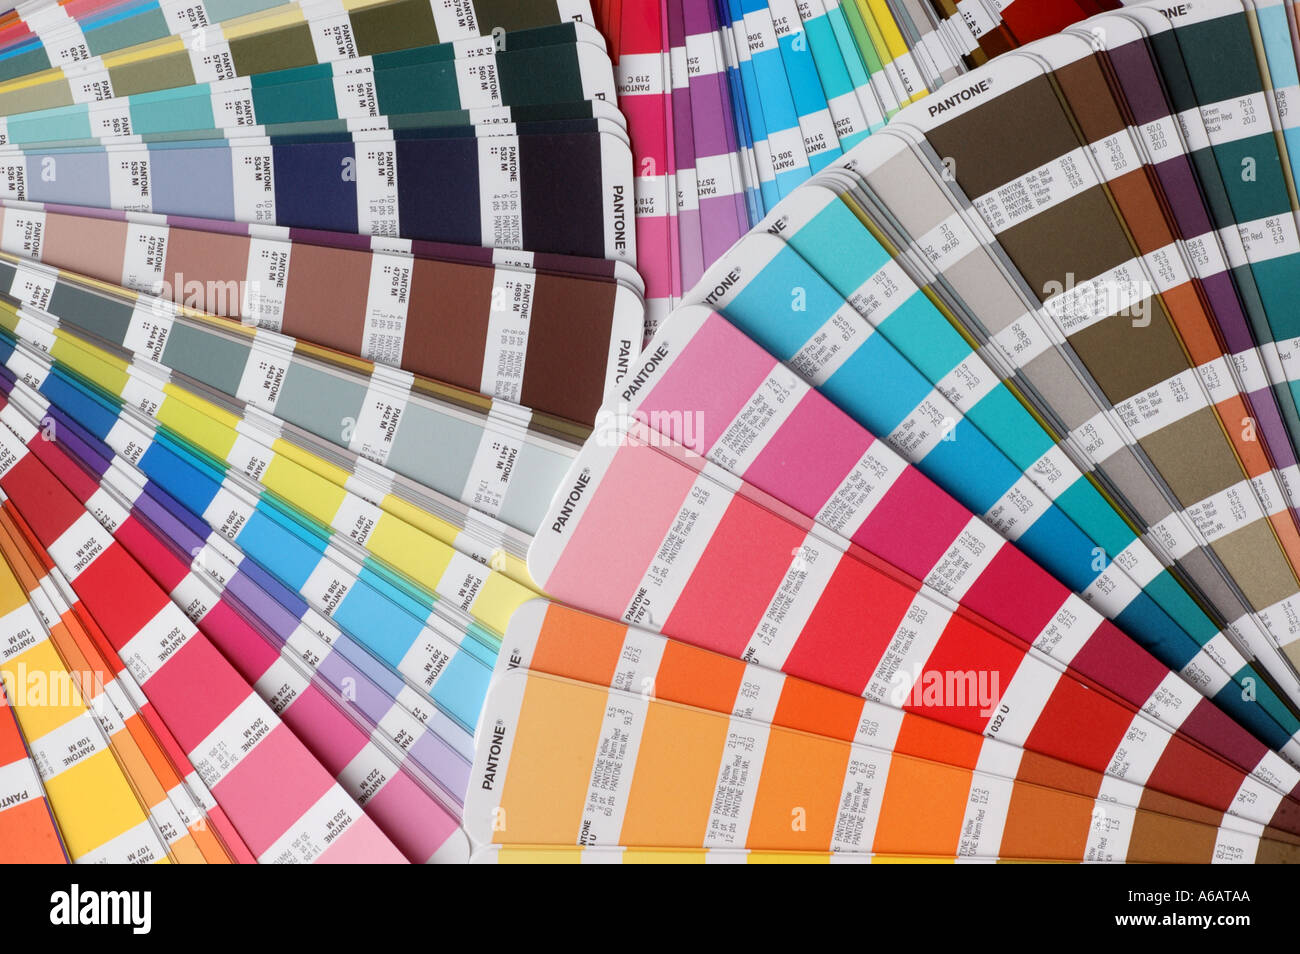 Pantone printing industry standard colour charts dsca 2132 Stock Photo -  Alamy